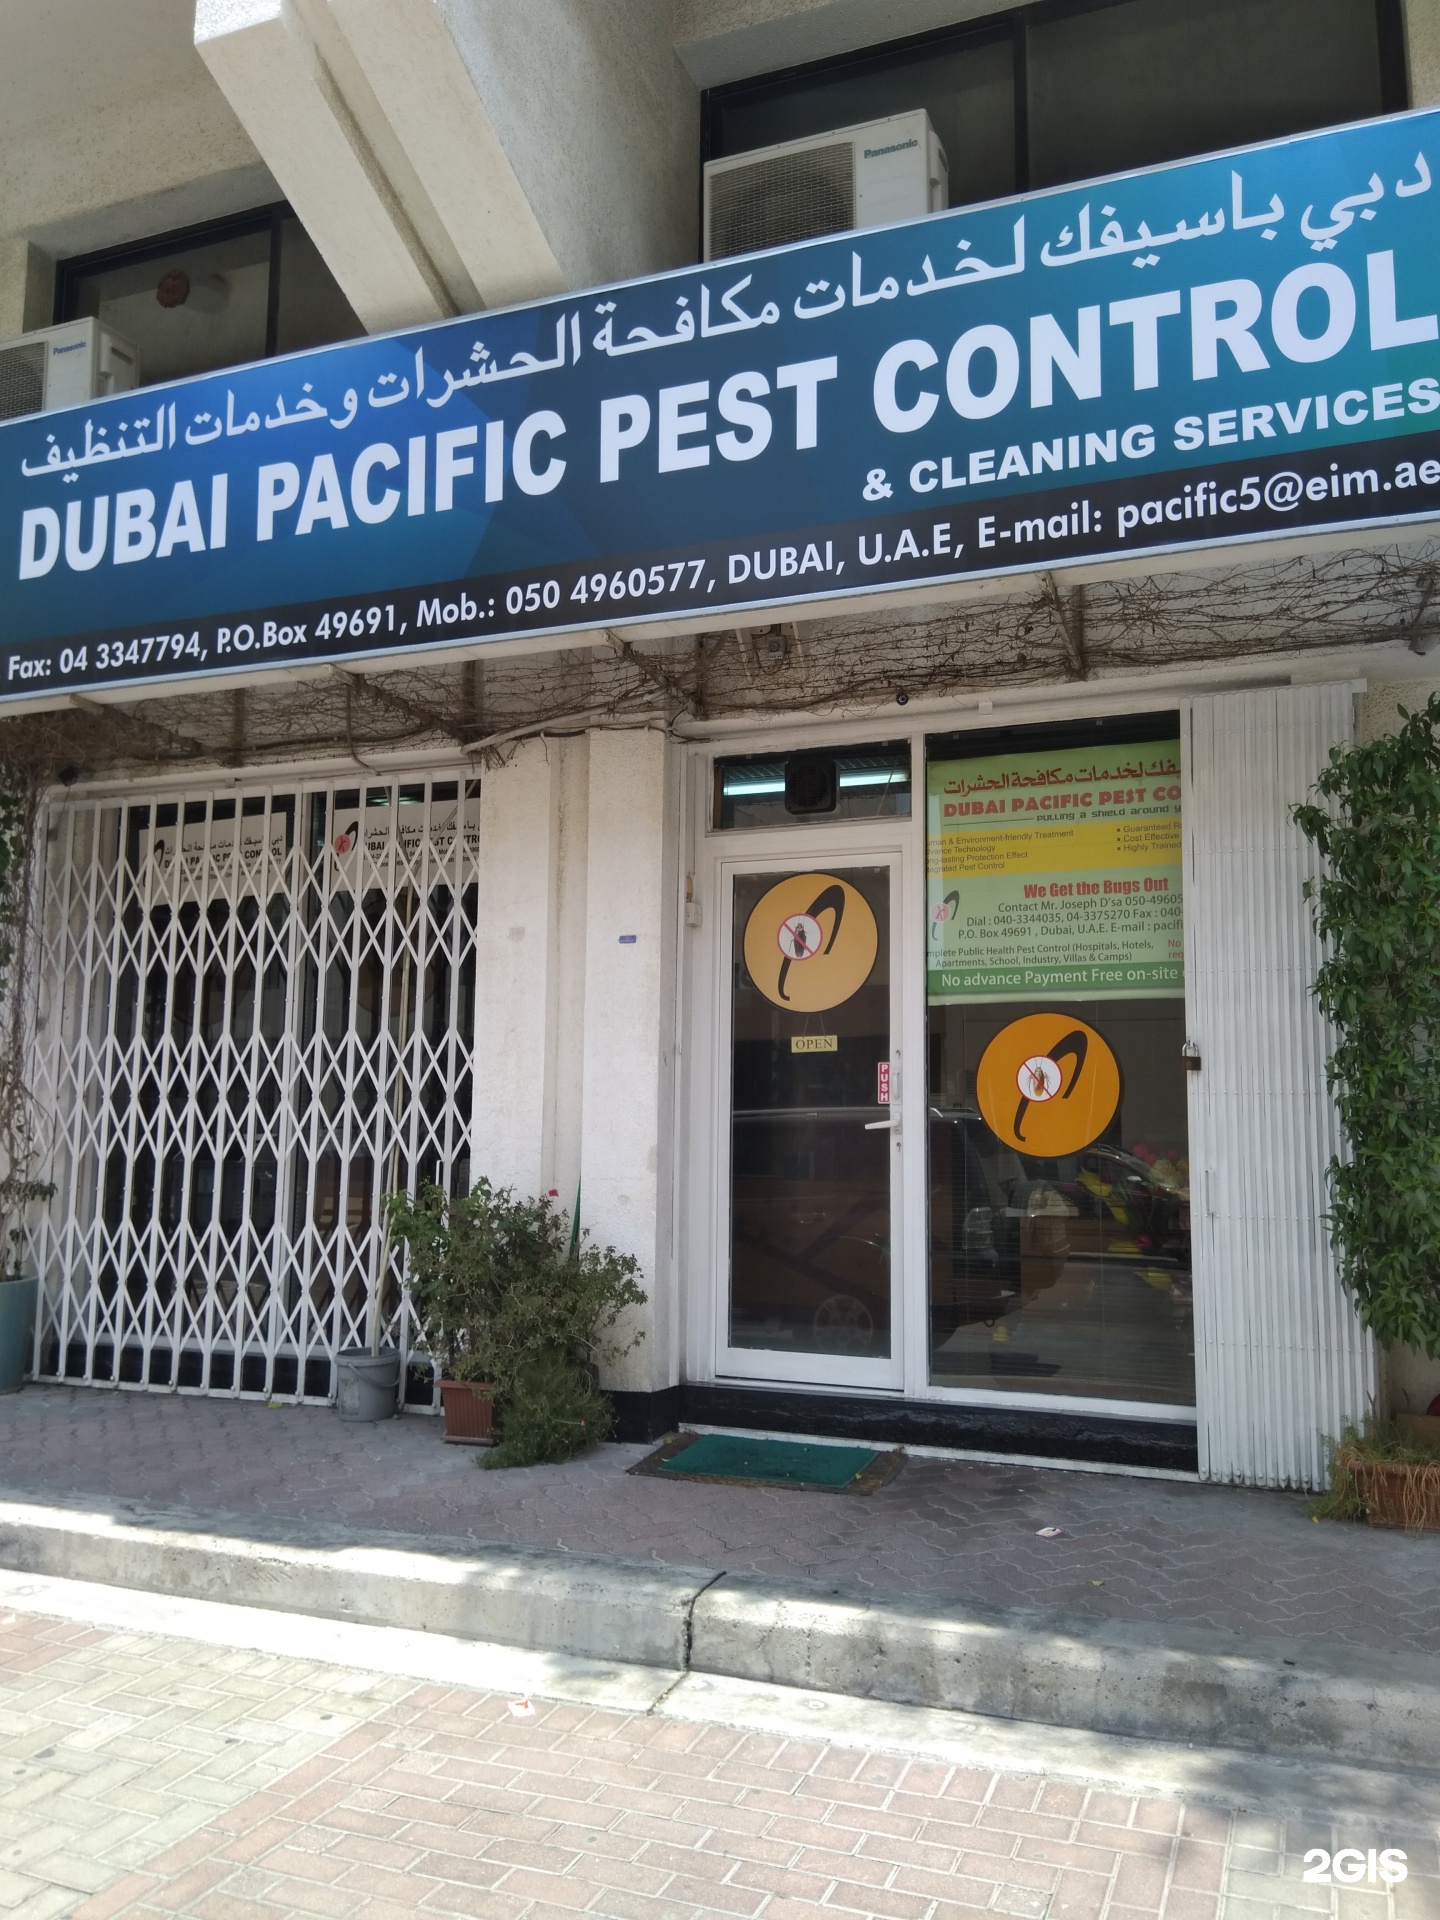 Dubai Pacific Pest Control Cleaning Services Company Zabeel House 1 61 20b Street Dubai 2gis